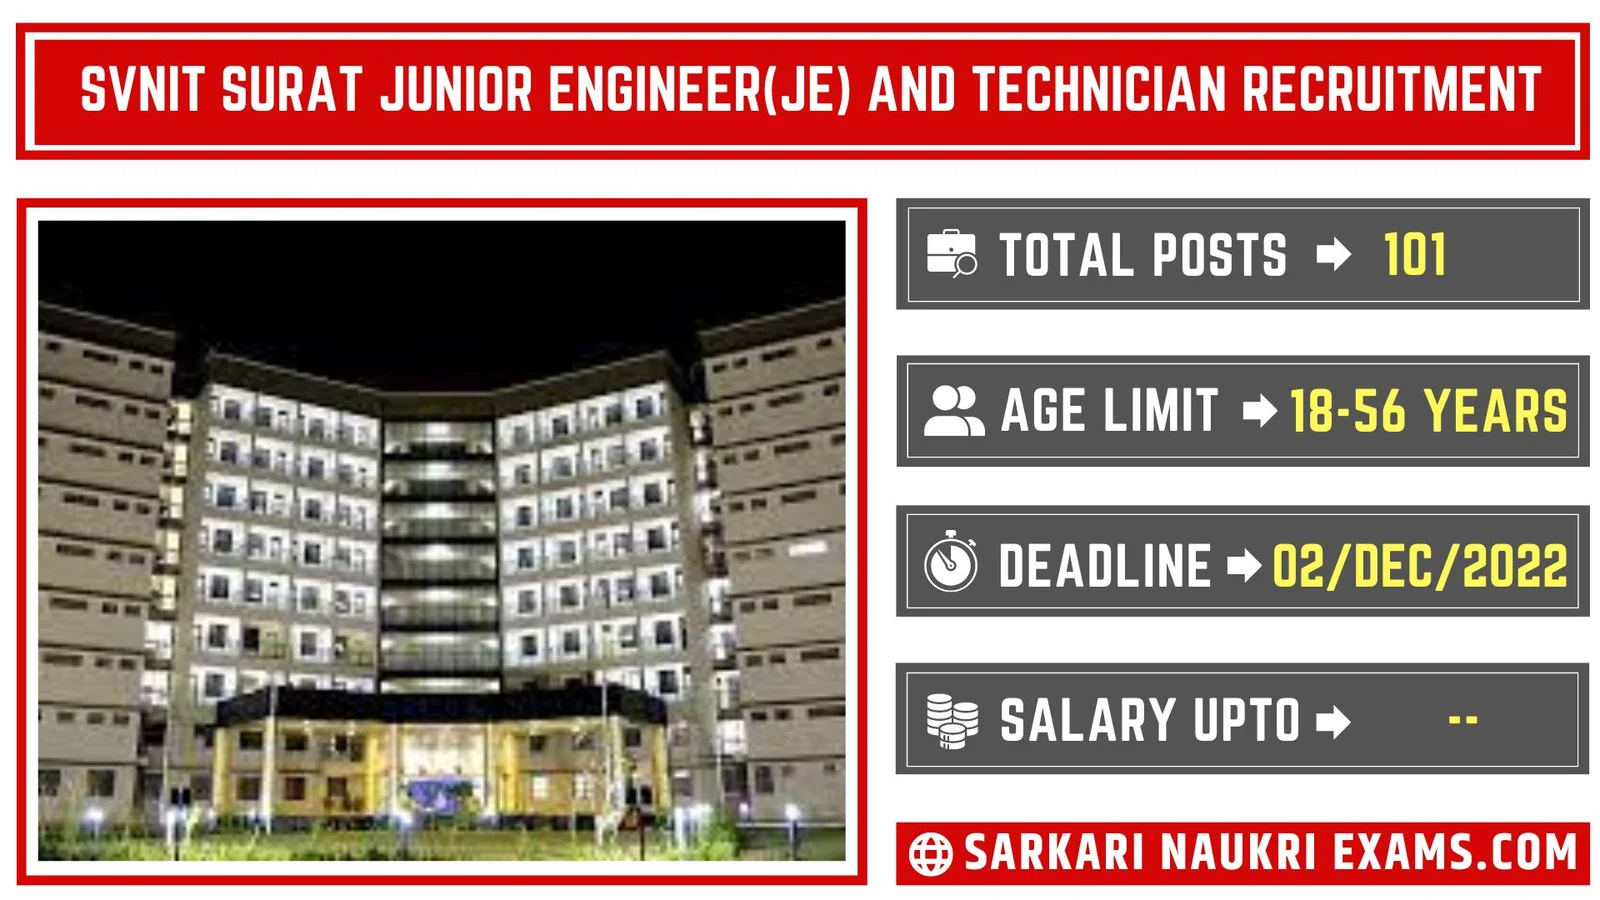 SVNIT Surat Junior Engineer(JE) and Technician Recruitment Form 2022